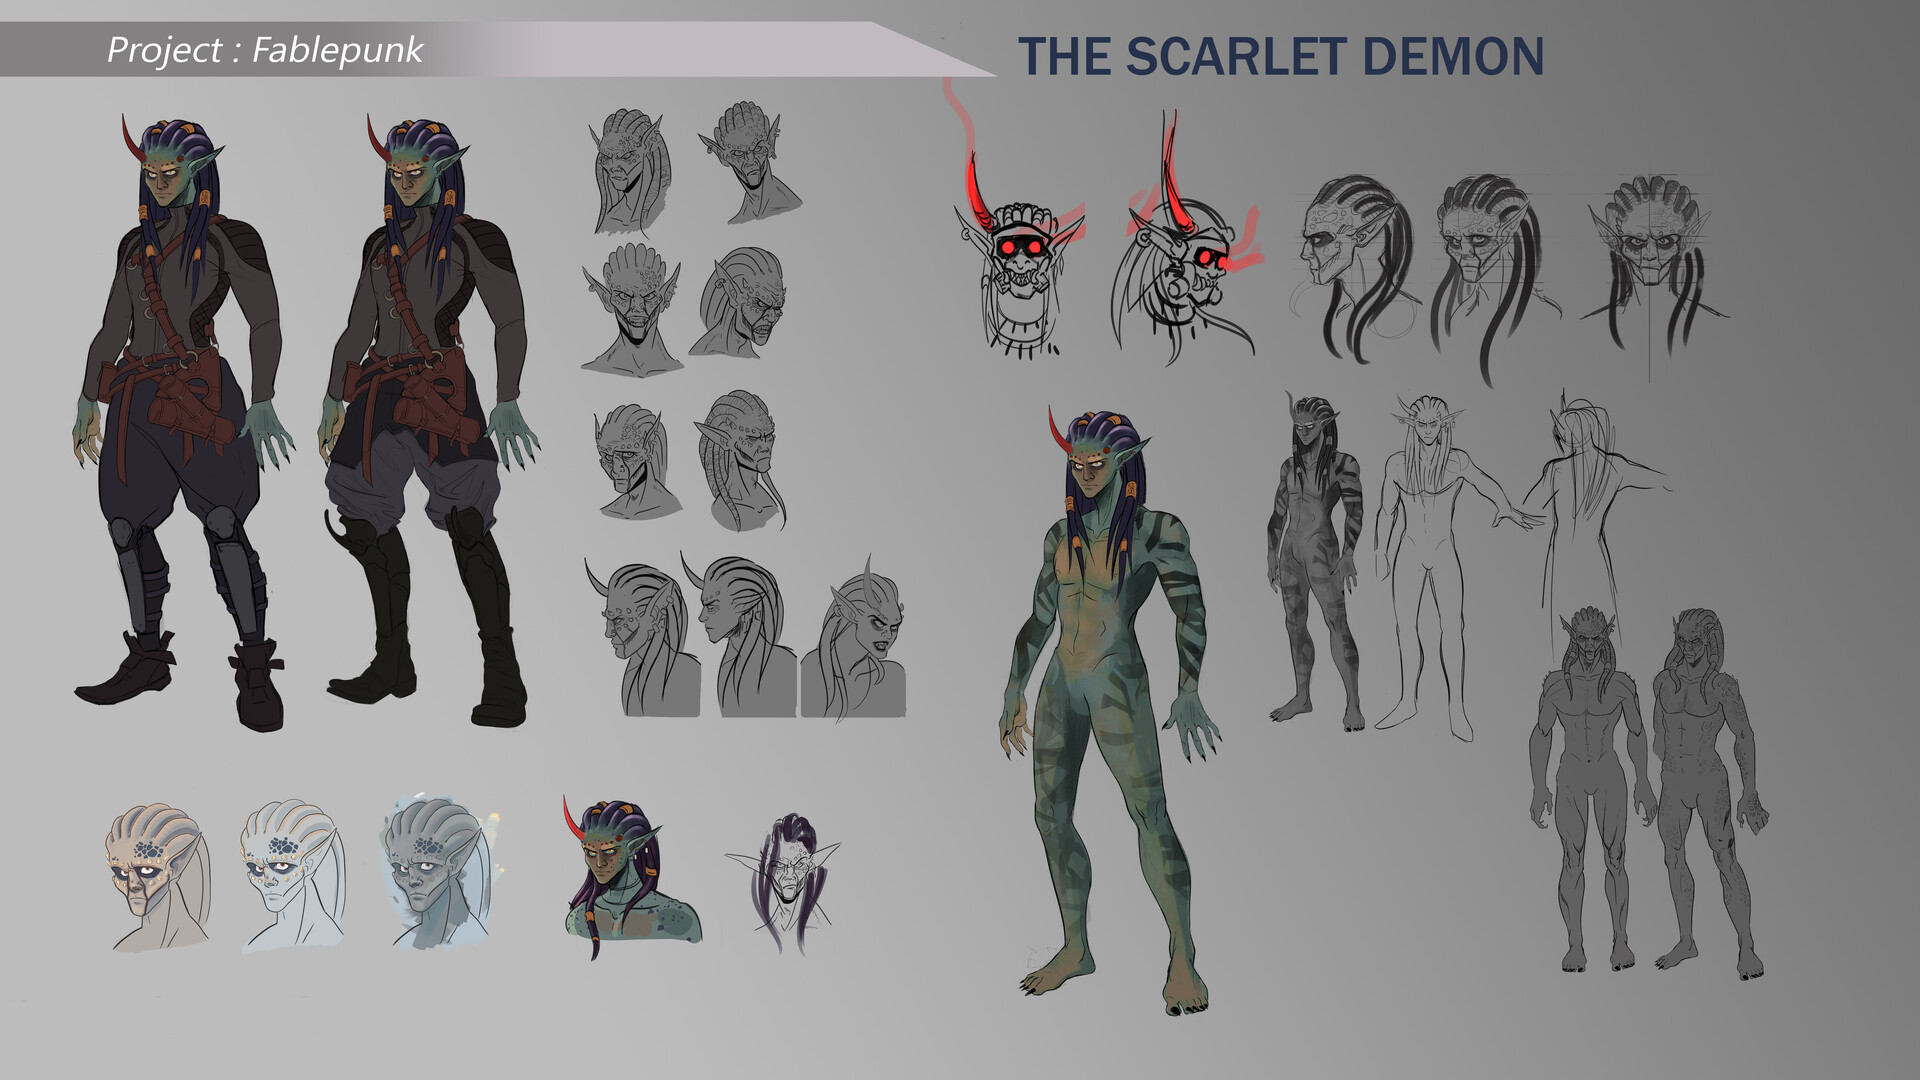 ArtStation - Demon Hunter in Scarlet